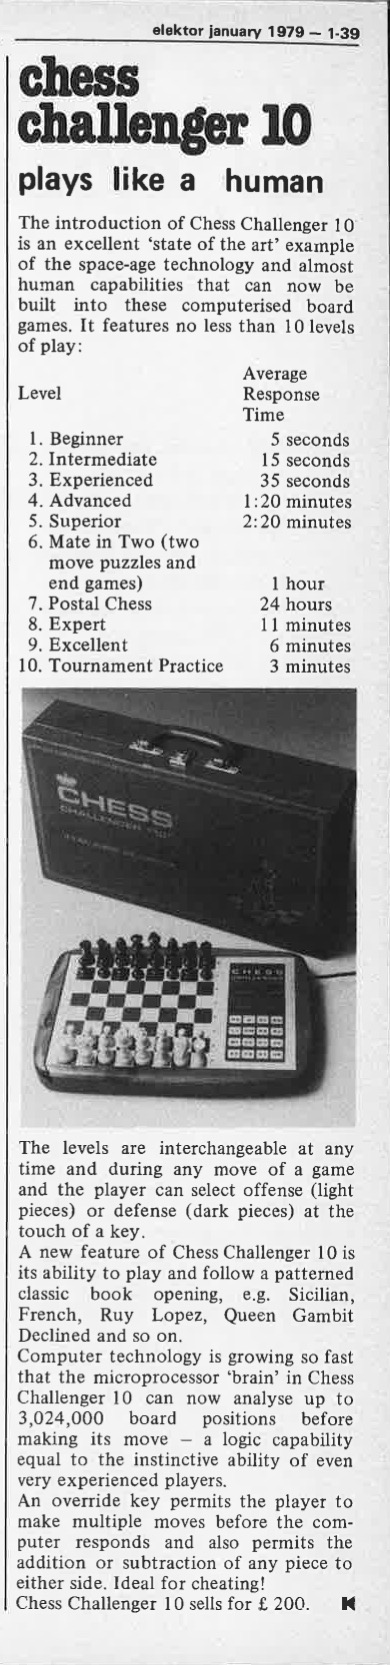 chess challenger 10